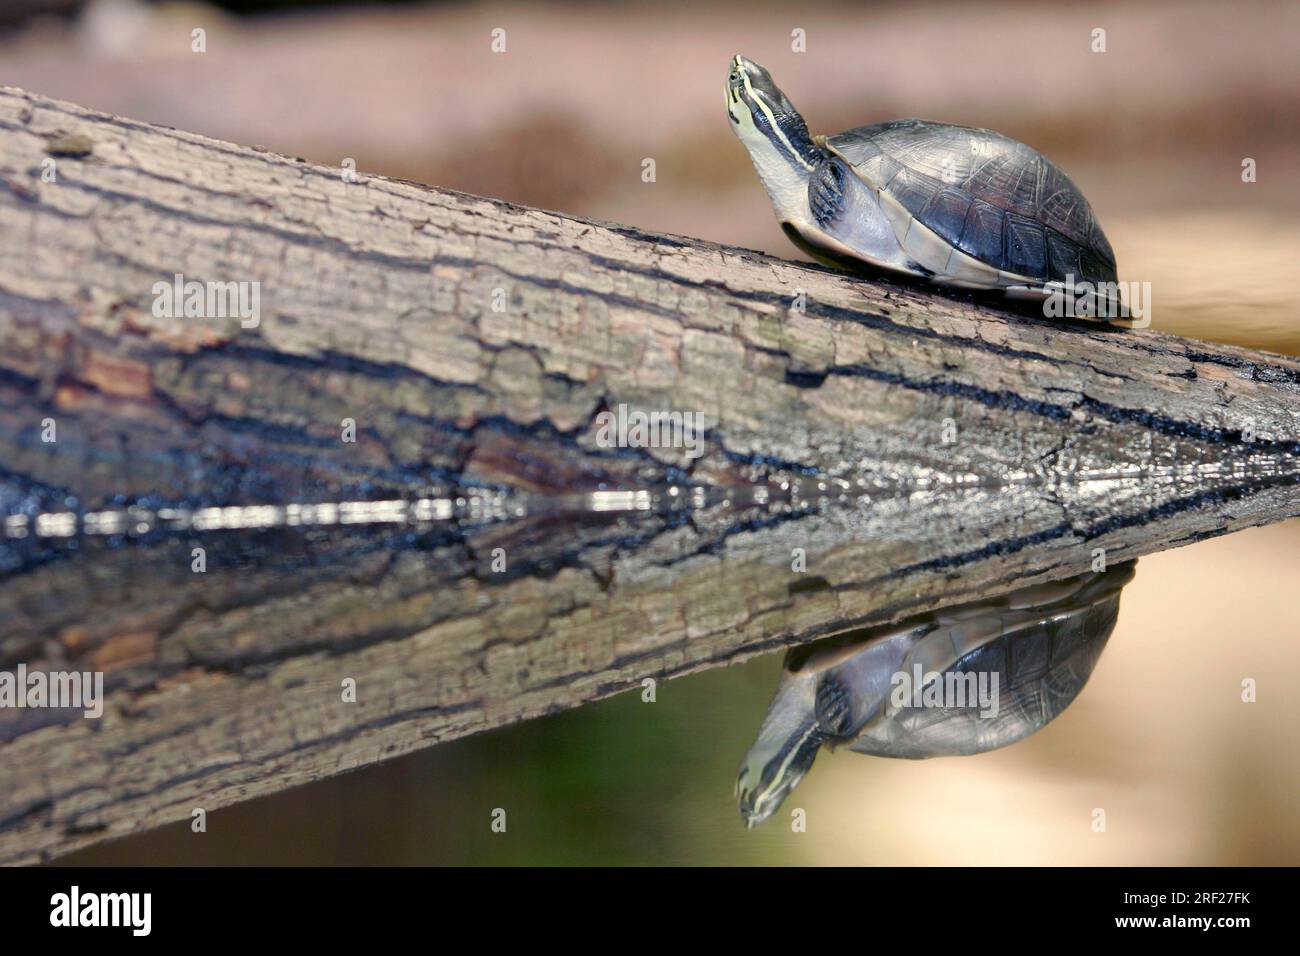 Amboina box turtle (Cuora amboinensis) Stock Photo